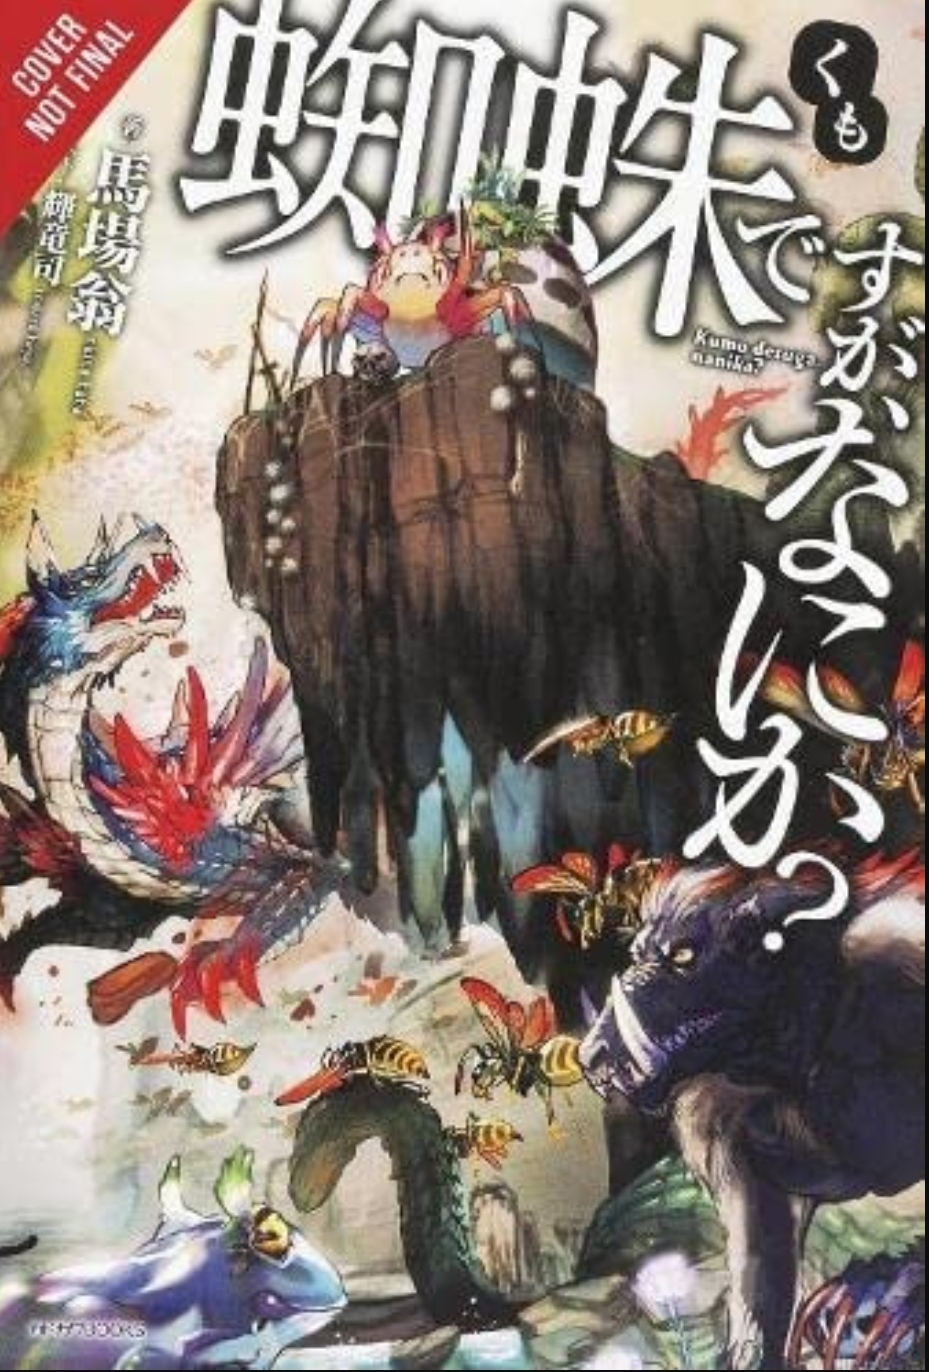 SO I’M A SPIDER, SO WHAT? - Best Isekai Light Novel Series